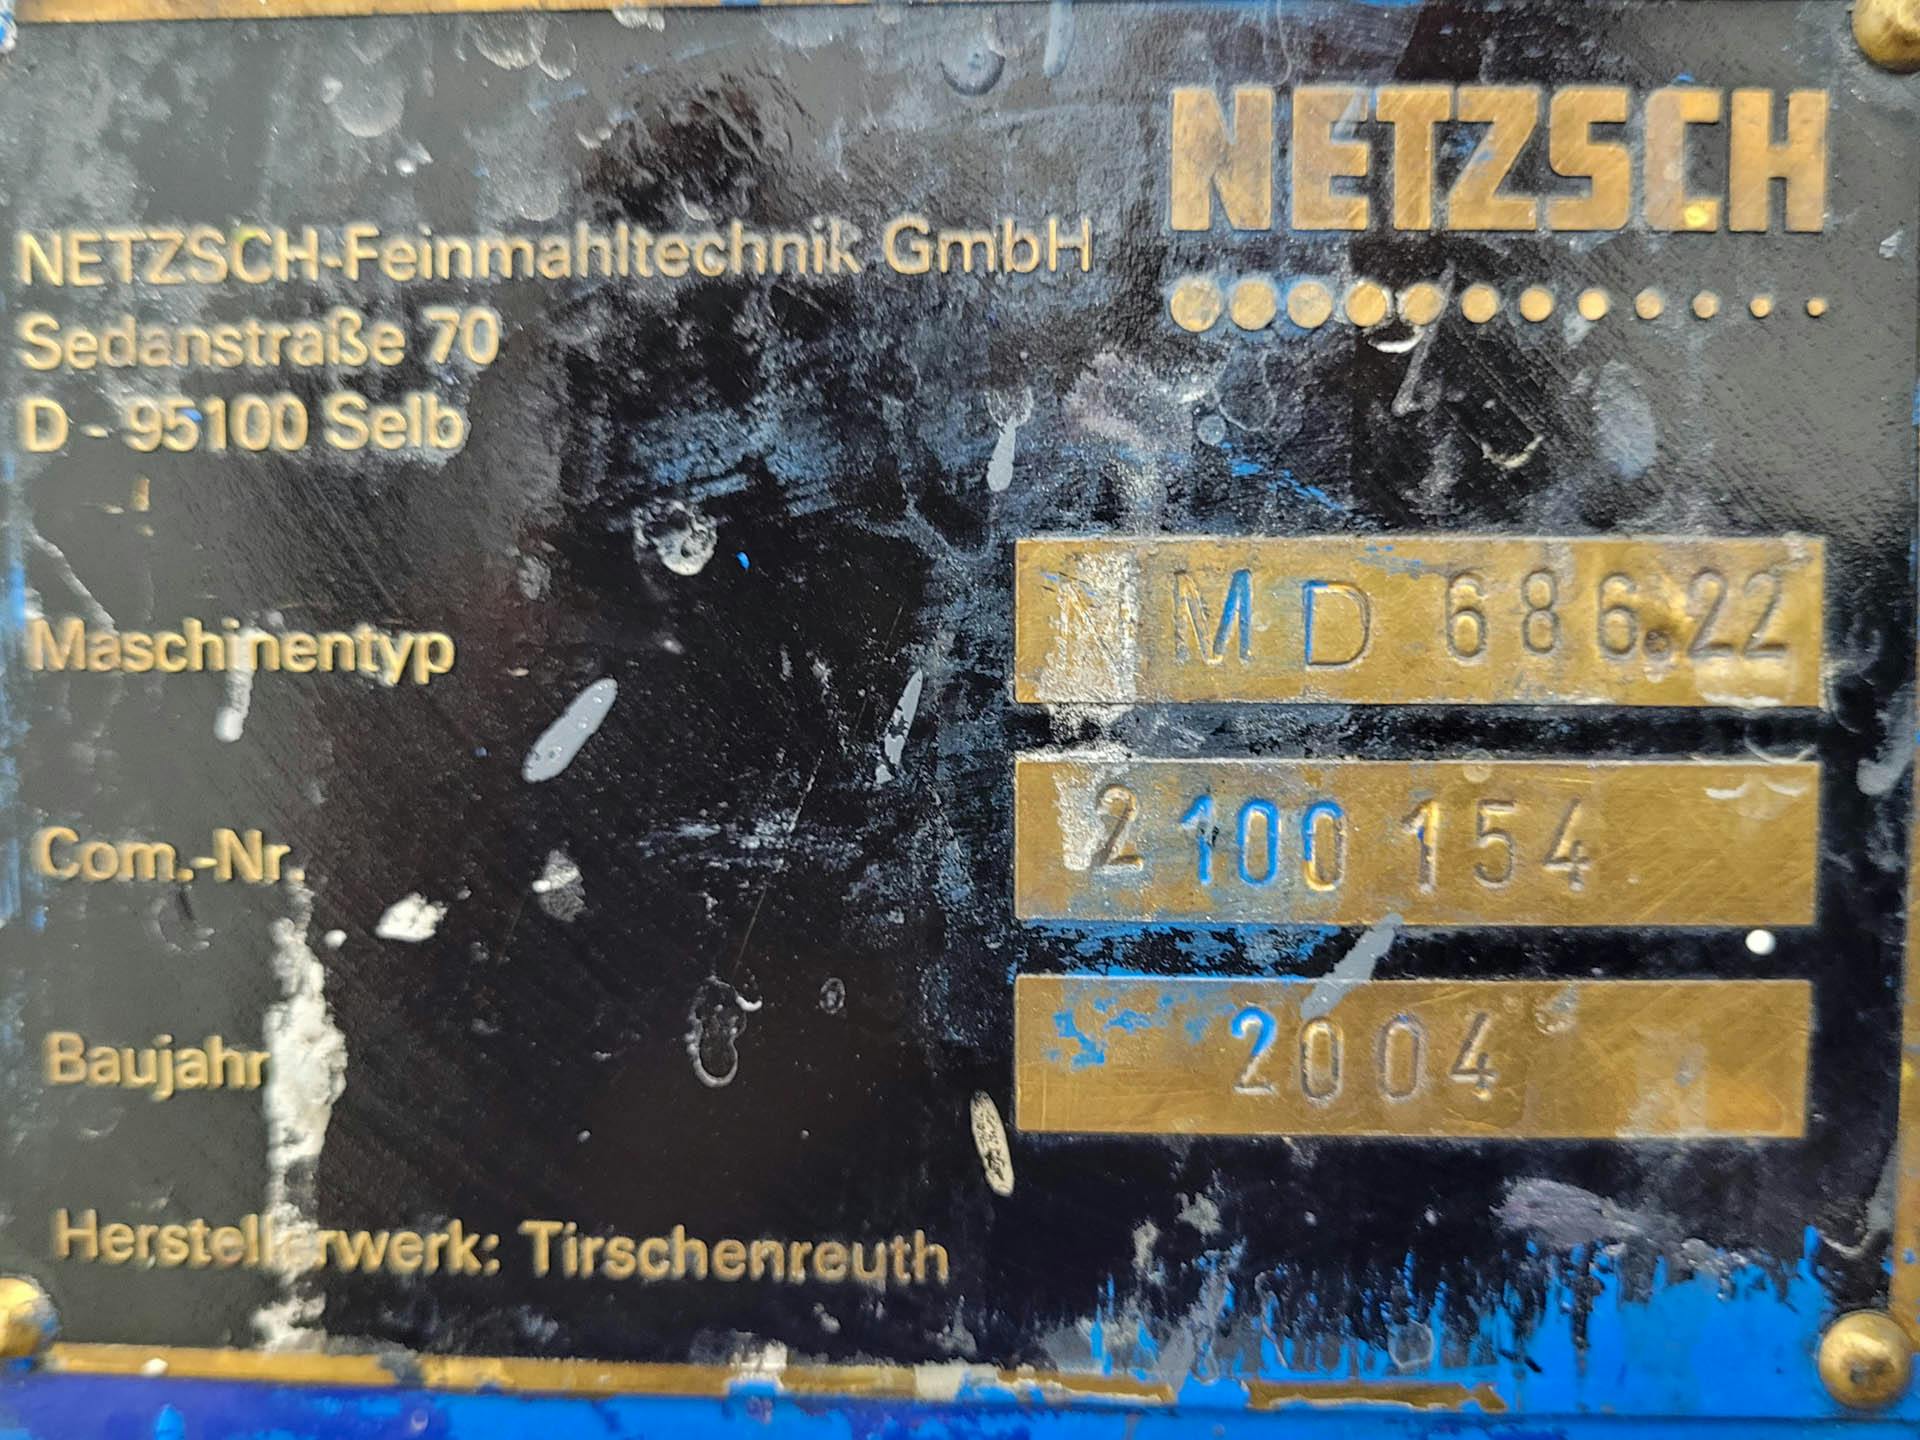 Netzsch NMD 686 22 - Dispersore - image 8